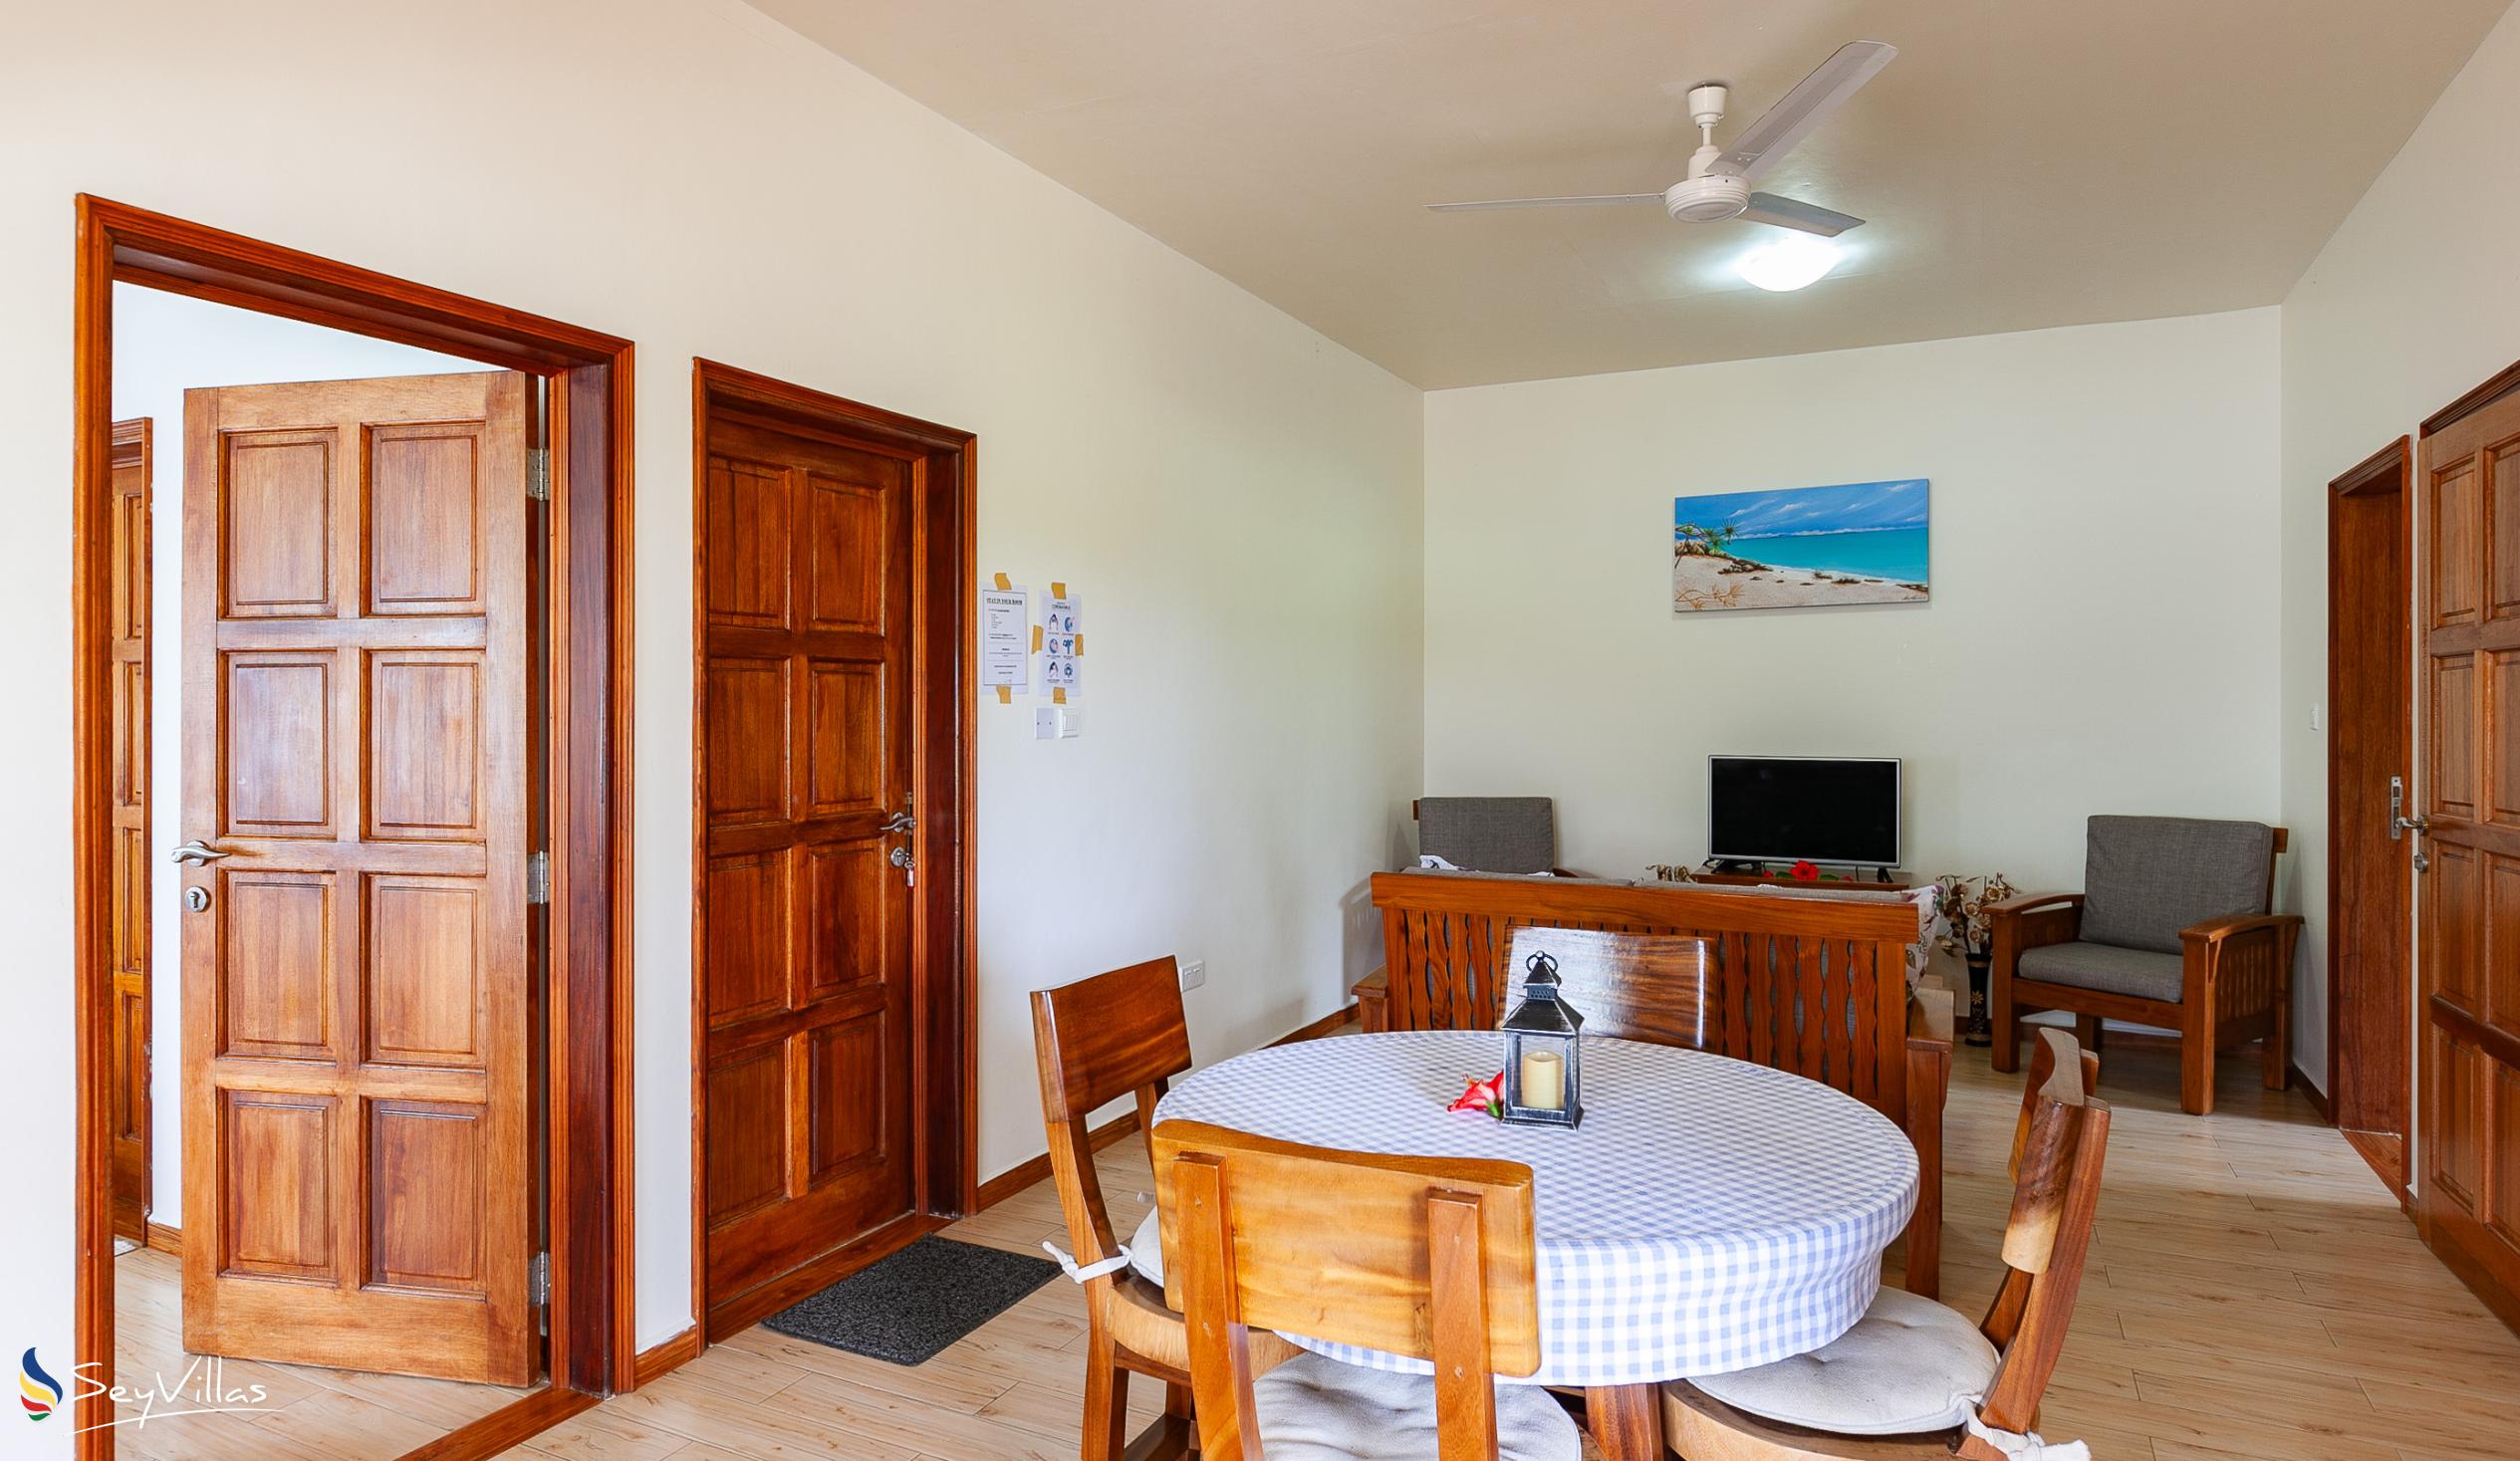 Photo 63: Seashell Beach Villa - 2-Bedroom Apartment - Praslin (Seychelles)